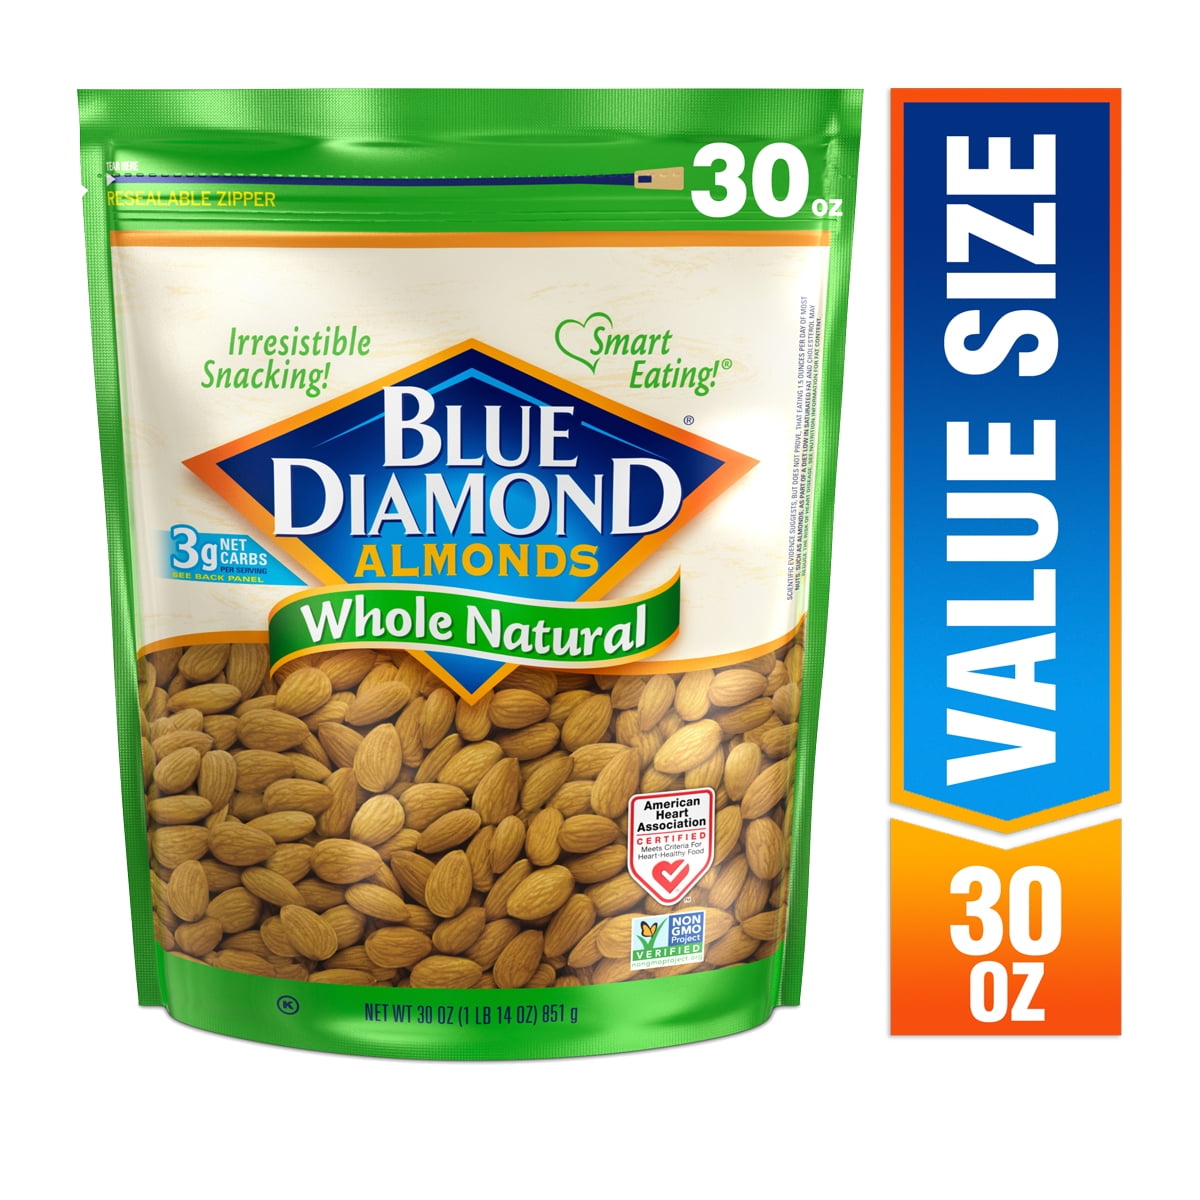 Blue Diamond Almonds Whole Natural Almonds, 30 oz